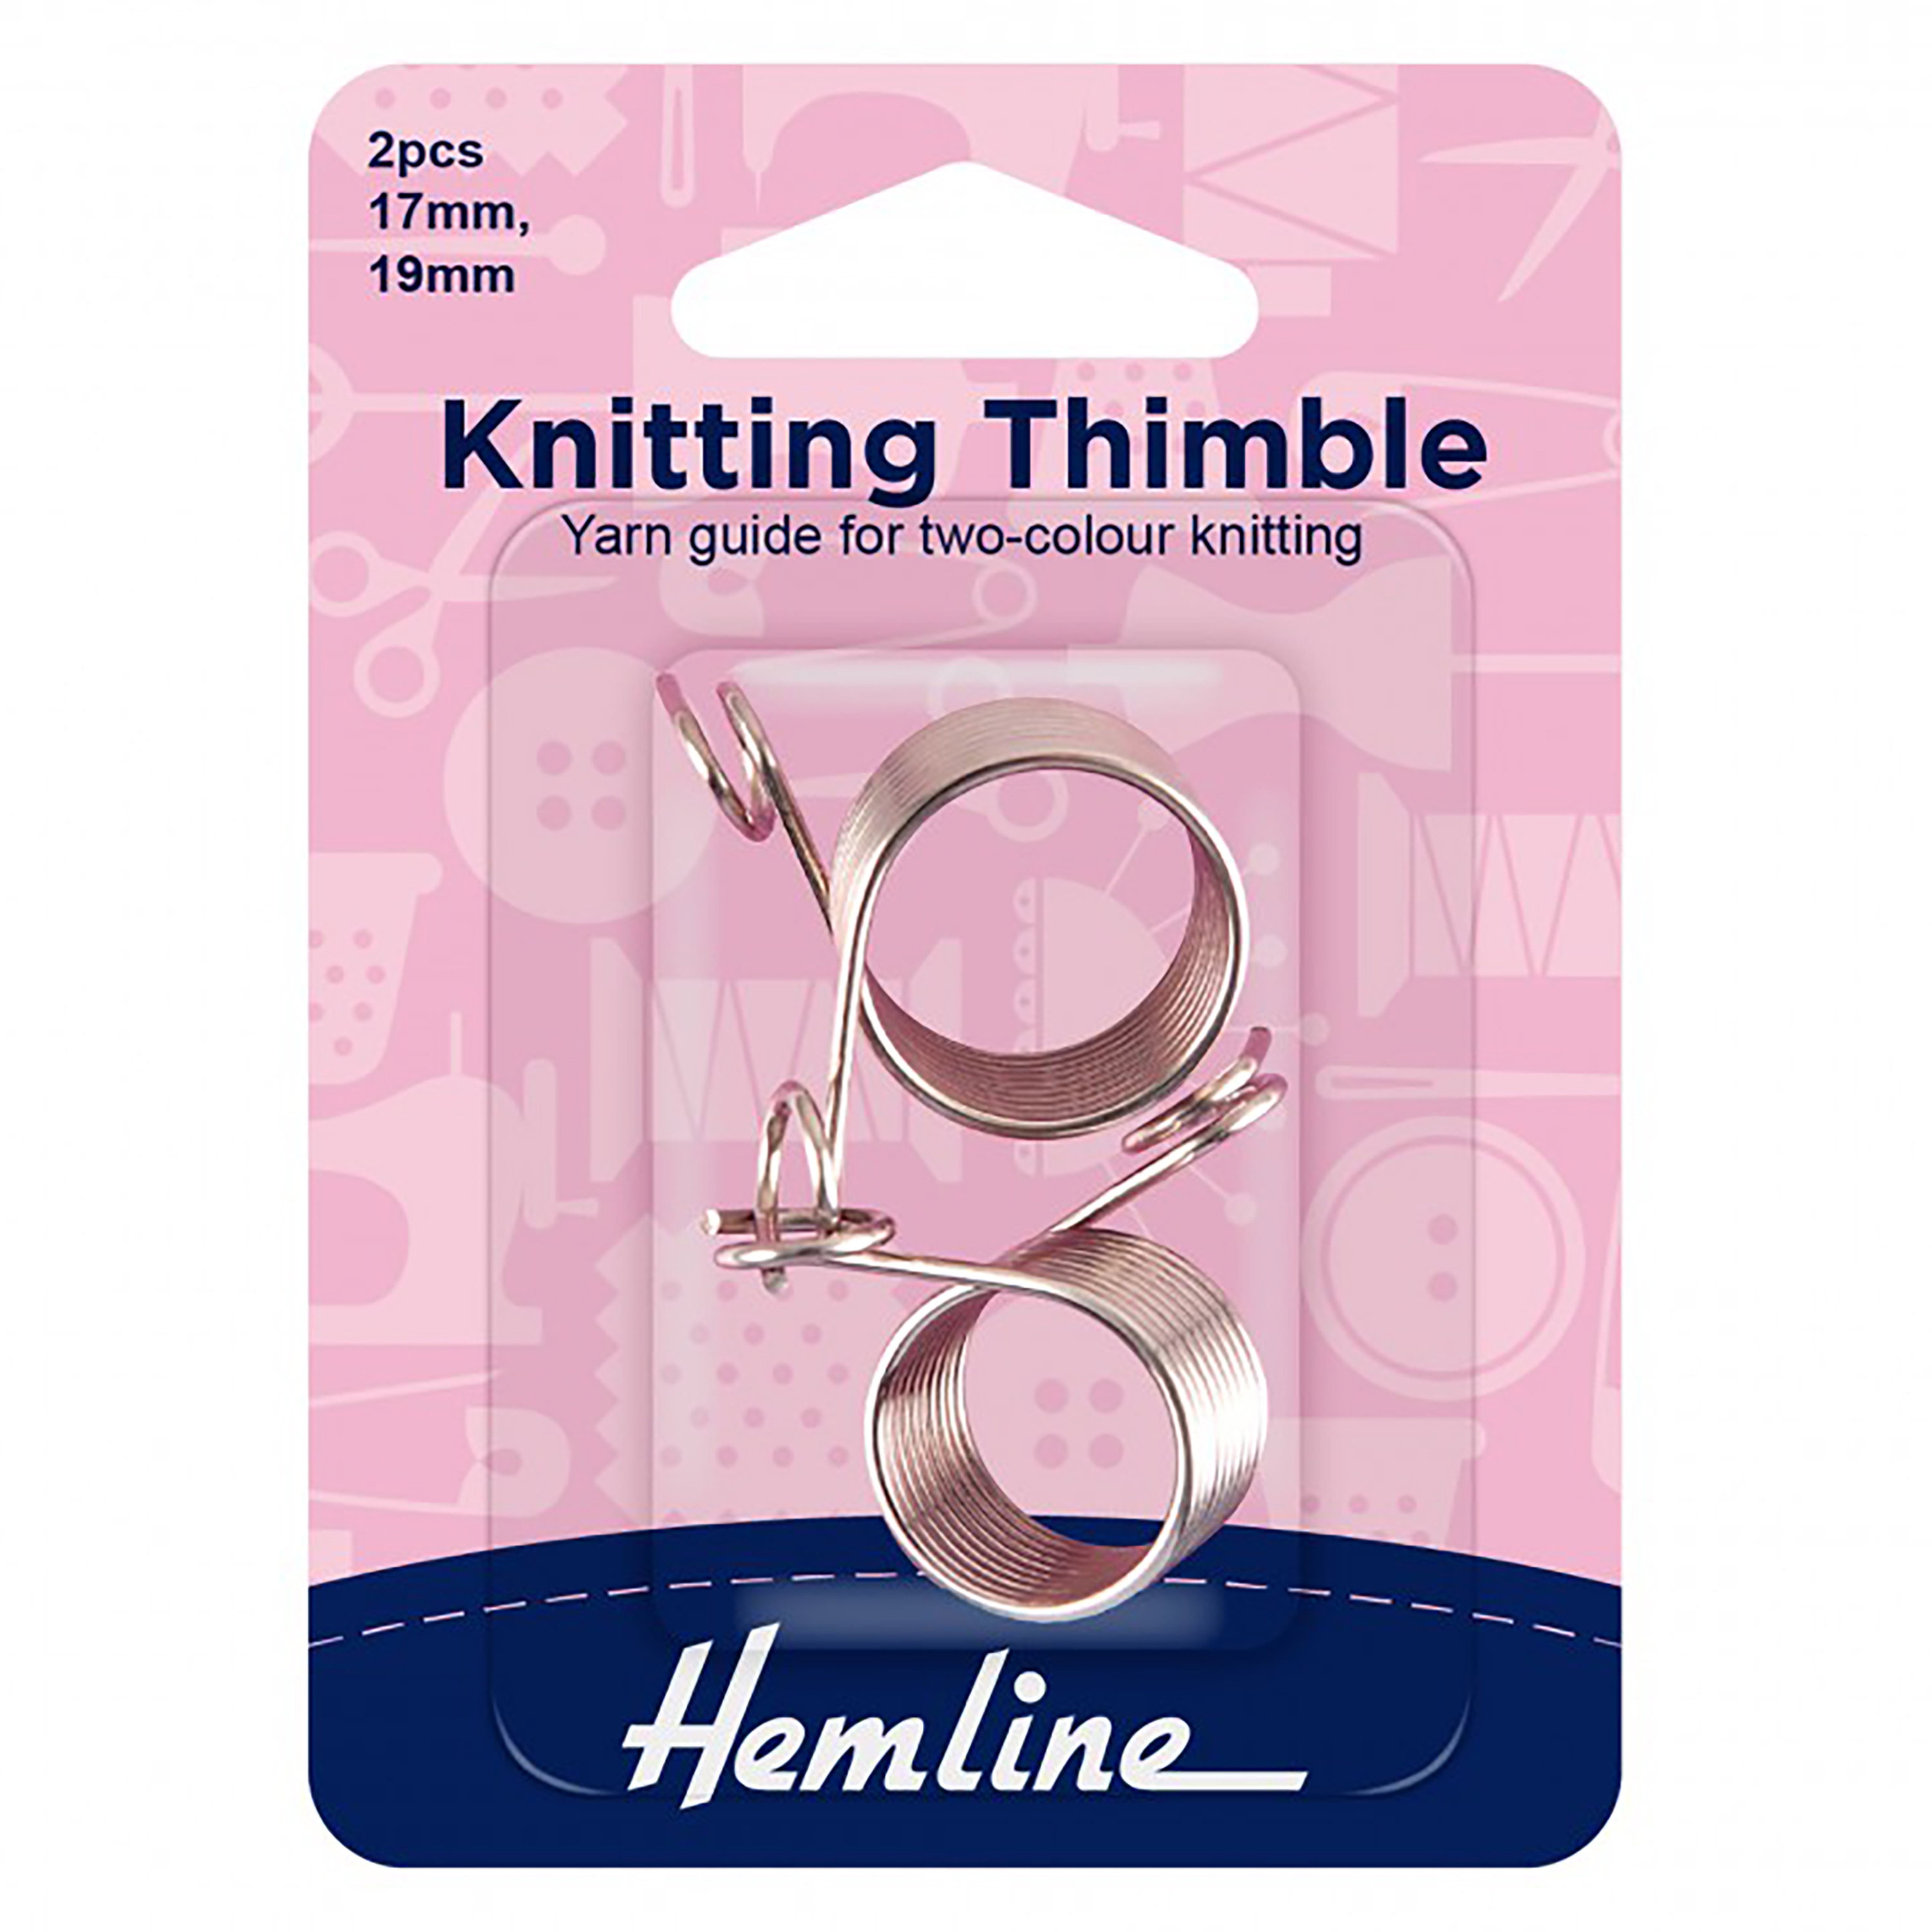 PDF DIGITAL PATTERN:Knit Finger Guard Pattern,Knitting/Crochet Tool,Knit  Cotton Finger Guard,Knitted Finger Protection,…